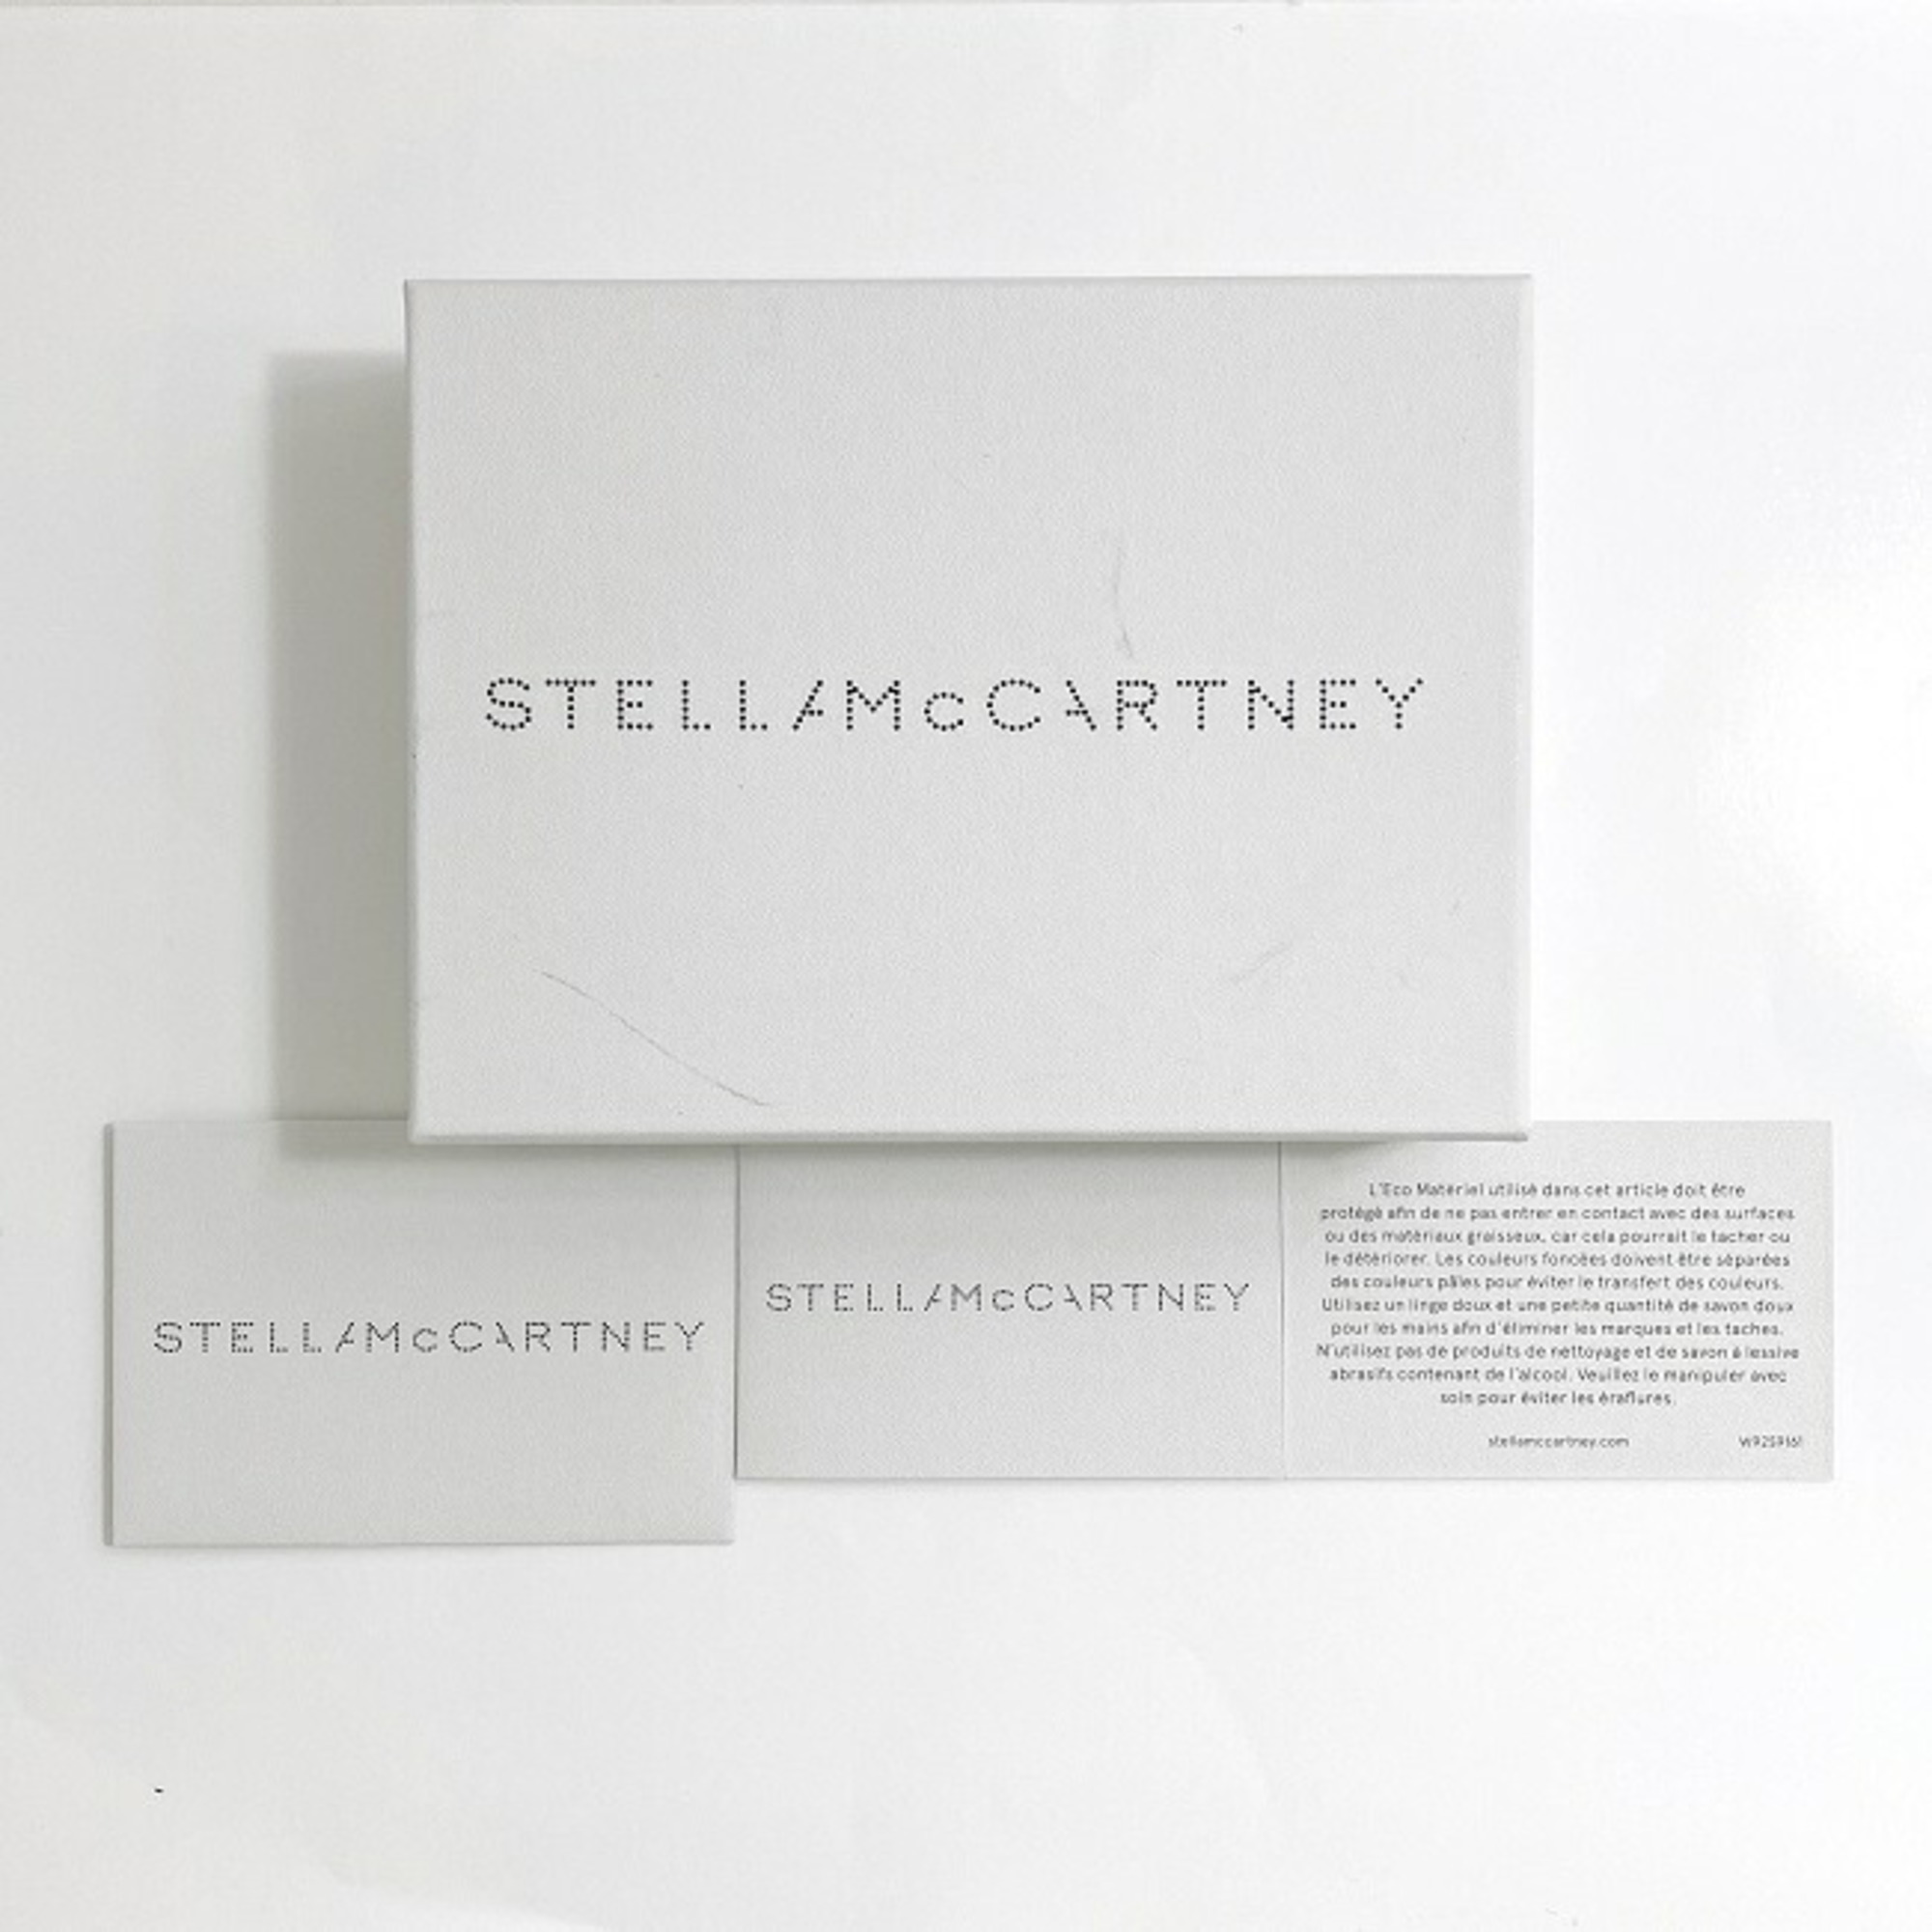 Stella McCartney coin case light blue orange gold 700258 w8857 4008 leather STELLA McCARTNEY purse half moon wallet compact